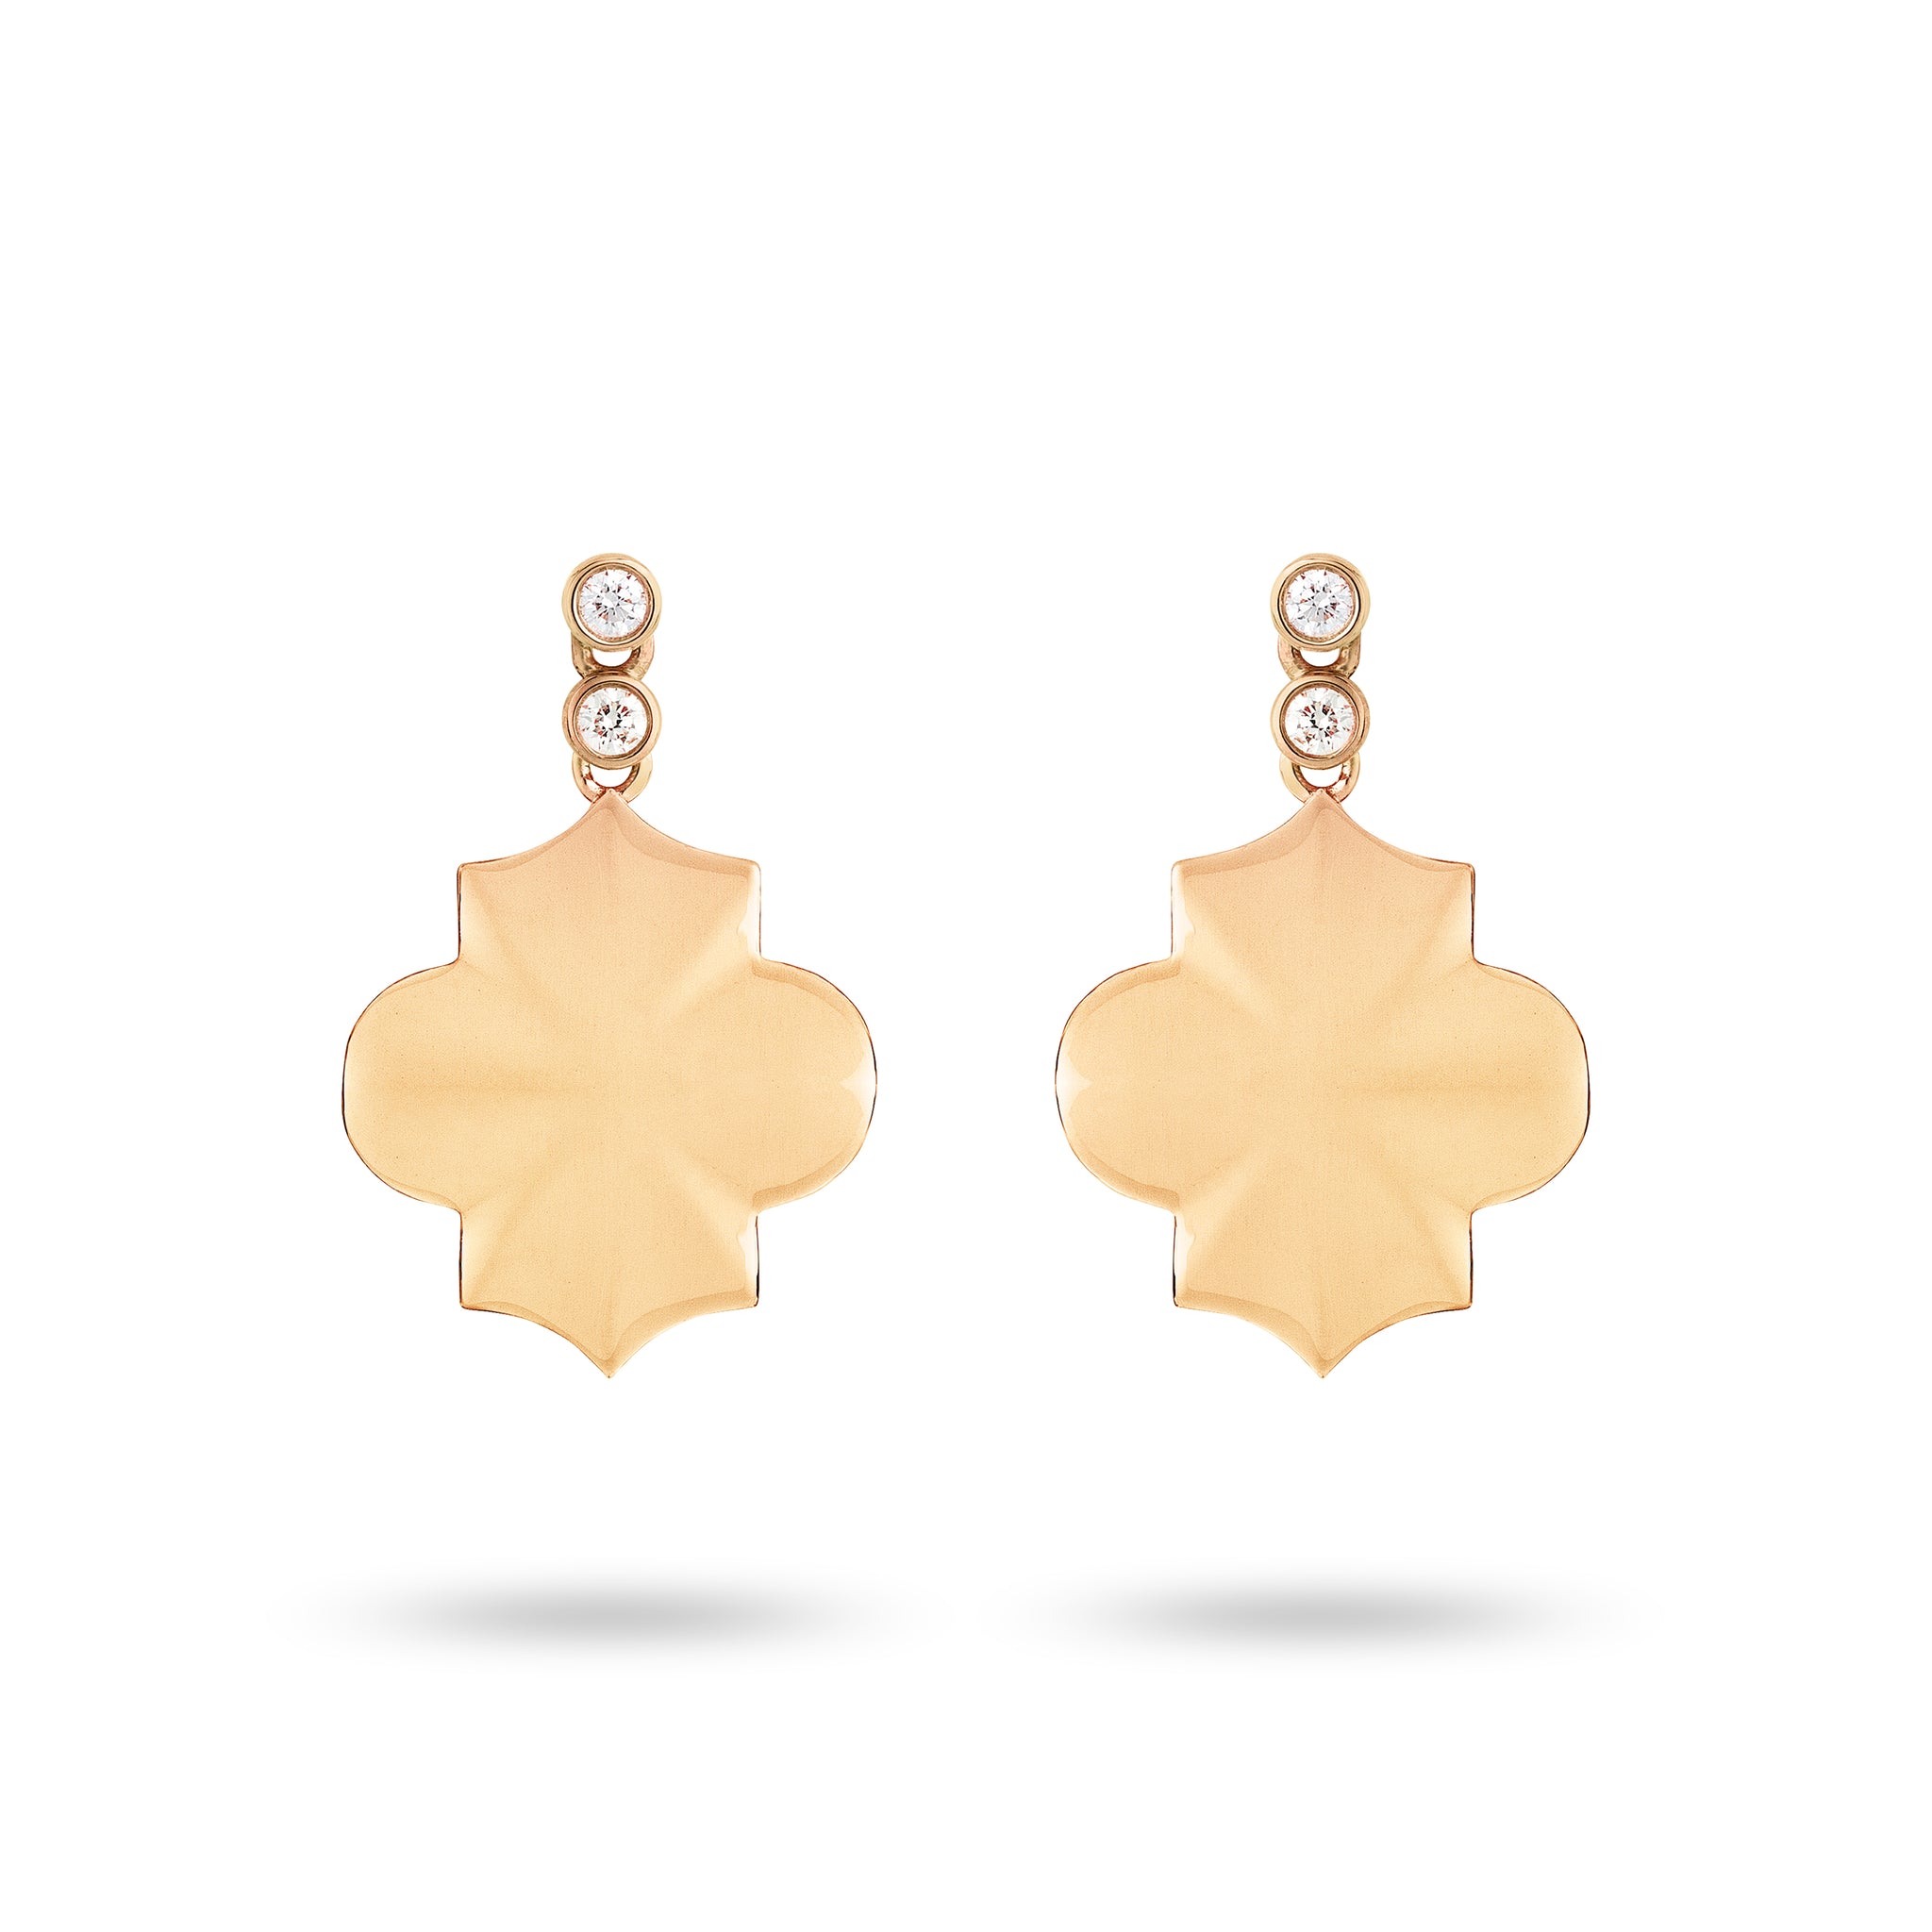 Regal - Yellow Gold Earrings - Ksenia Mirella Jewellery 